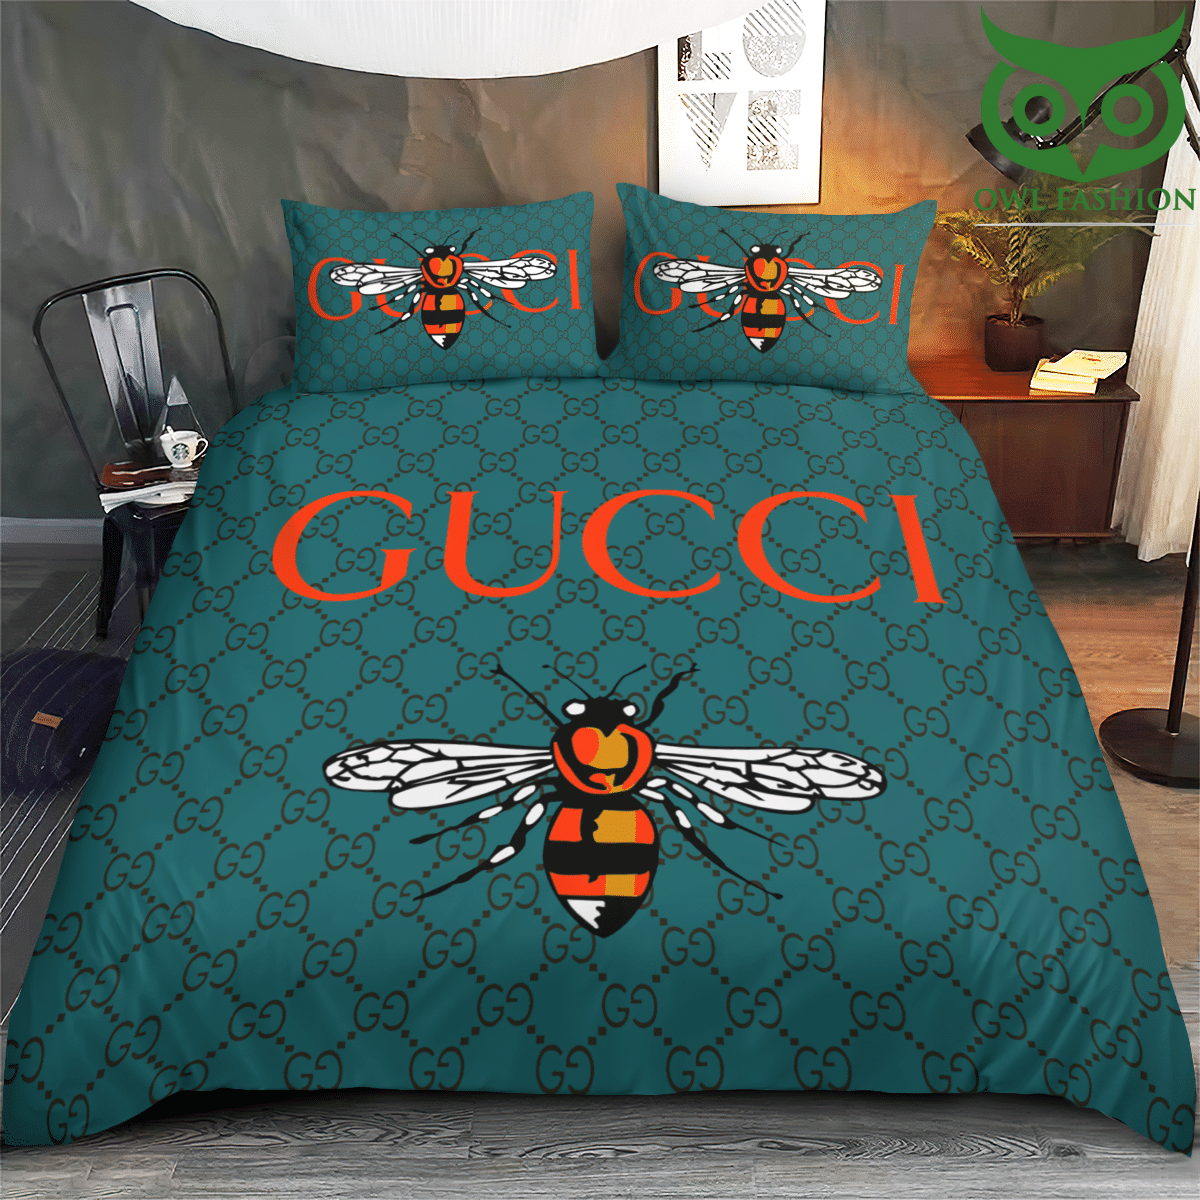 44 Gucci Bee blue luxury bedding set